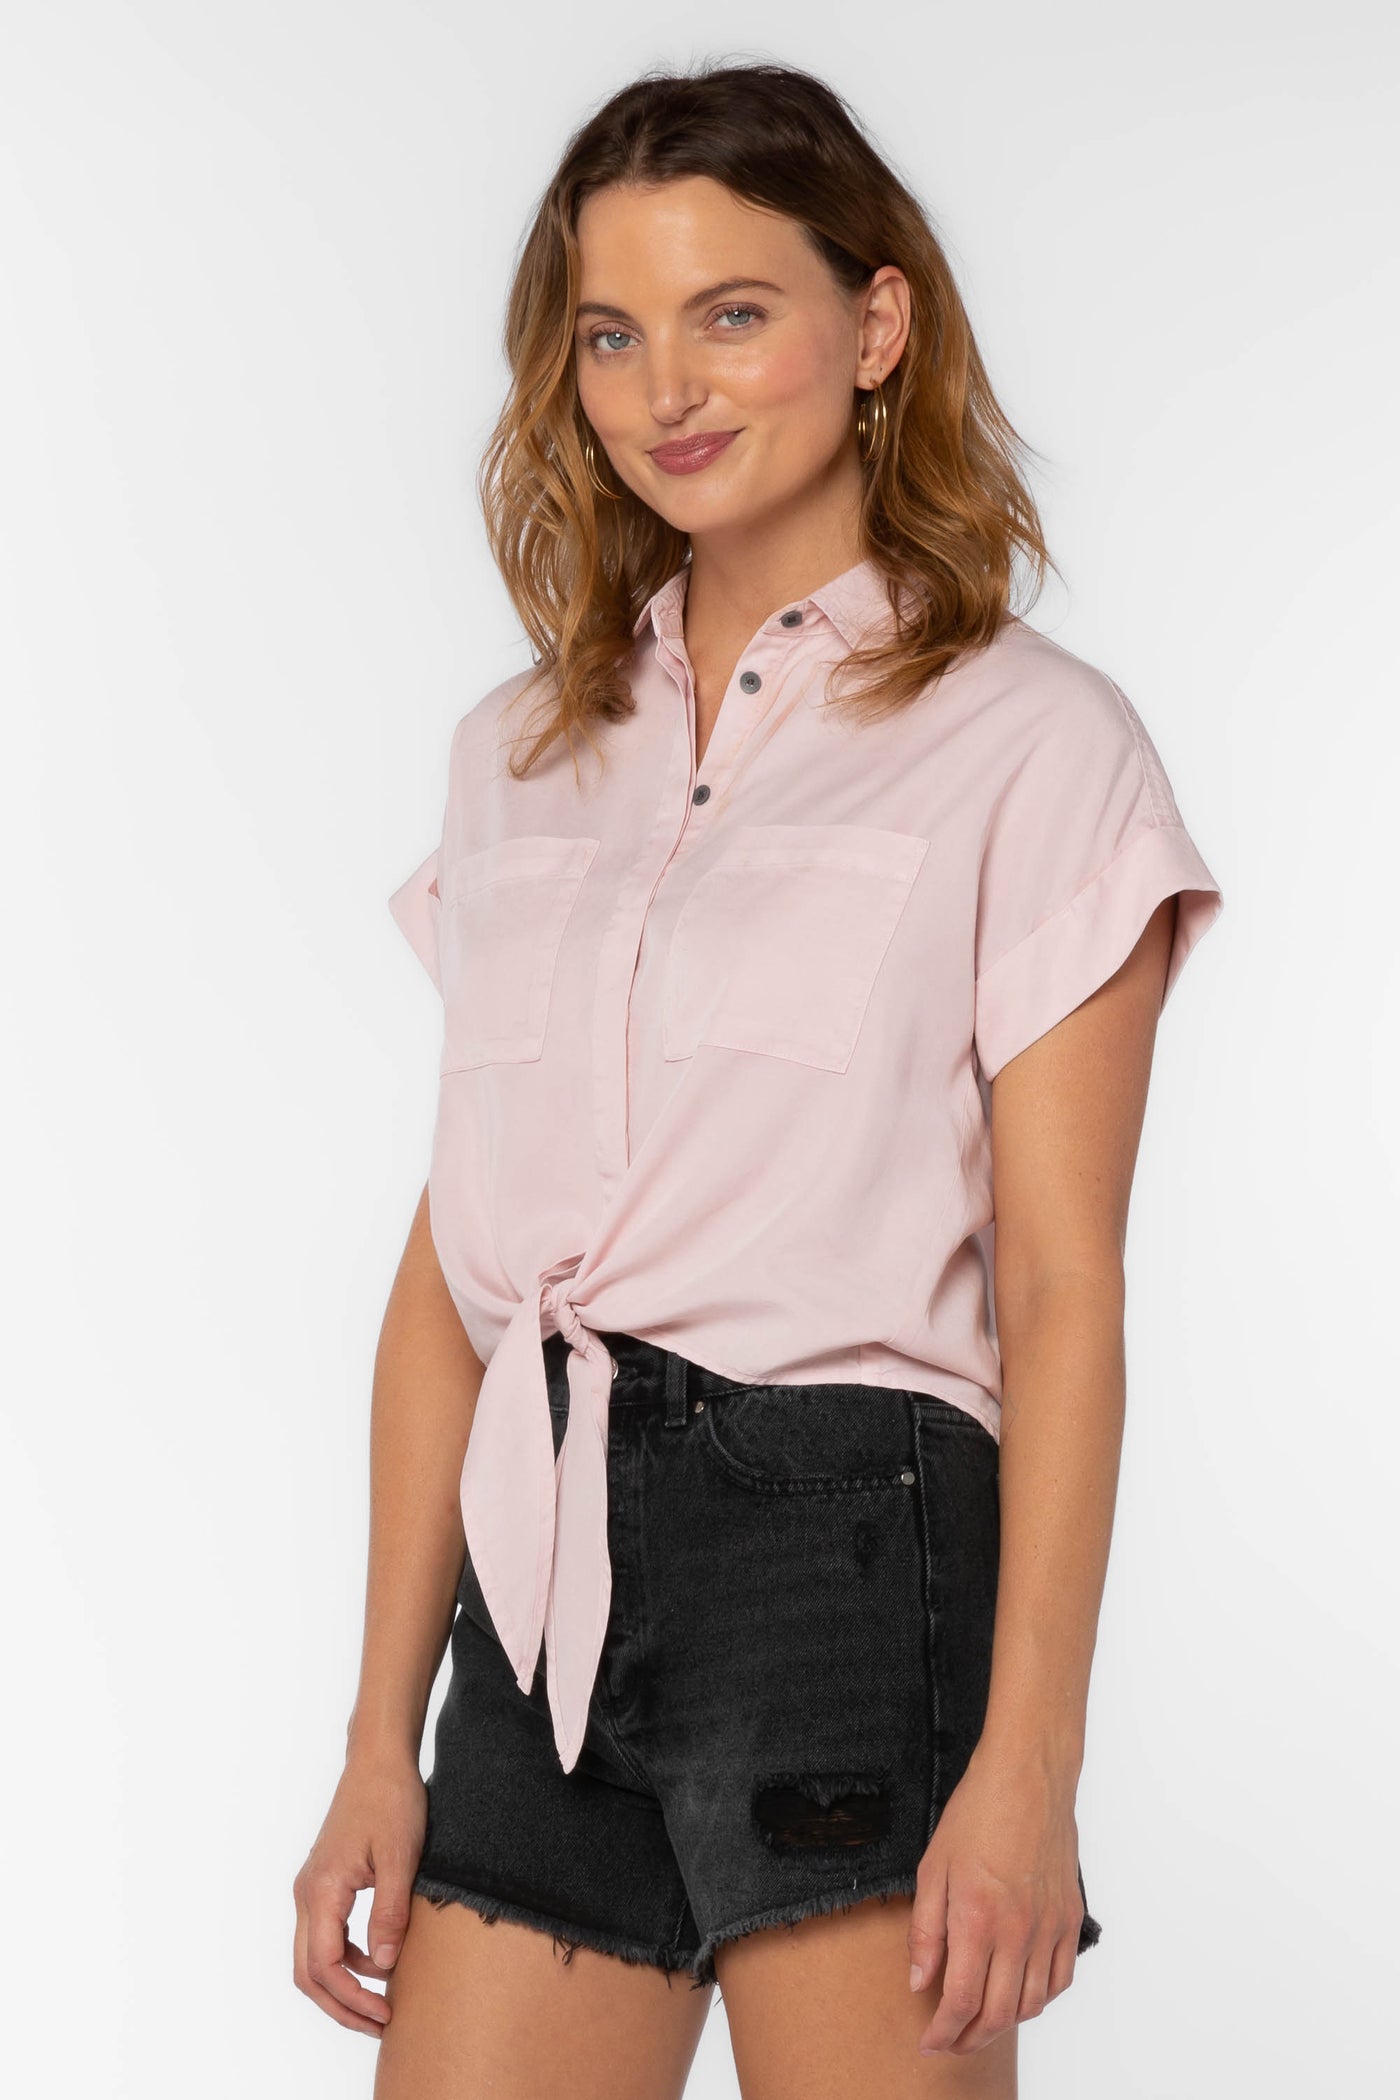 Zuria Pink Shirt - Tops - Velvet Heart Clothing